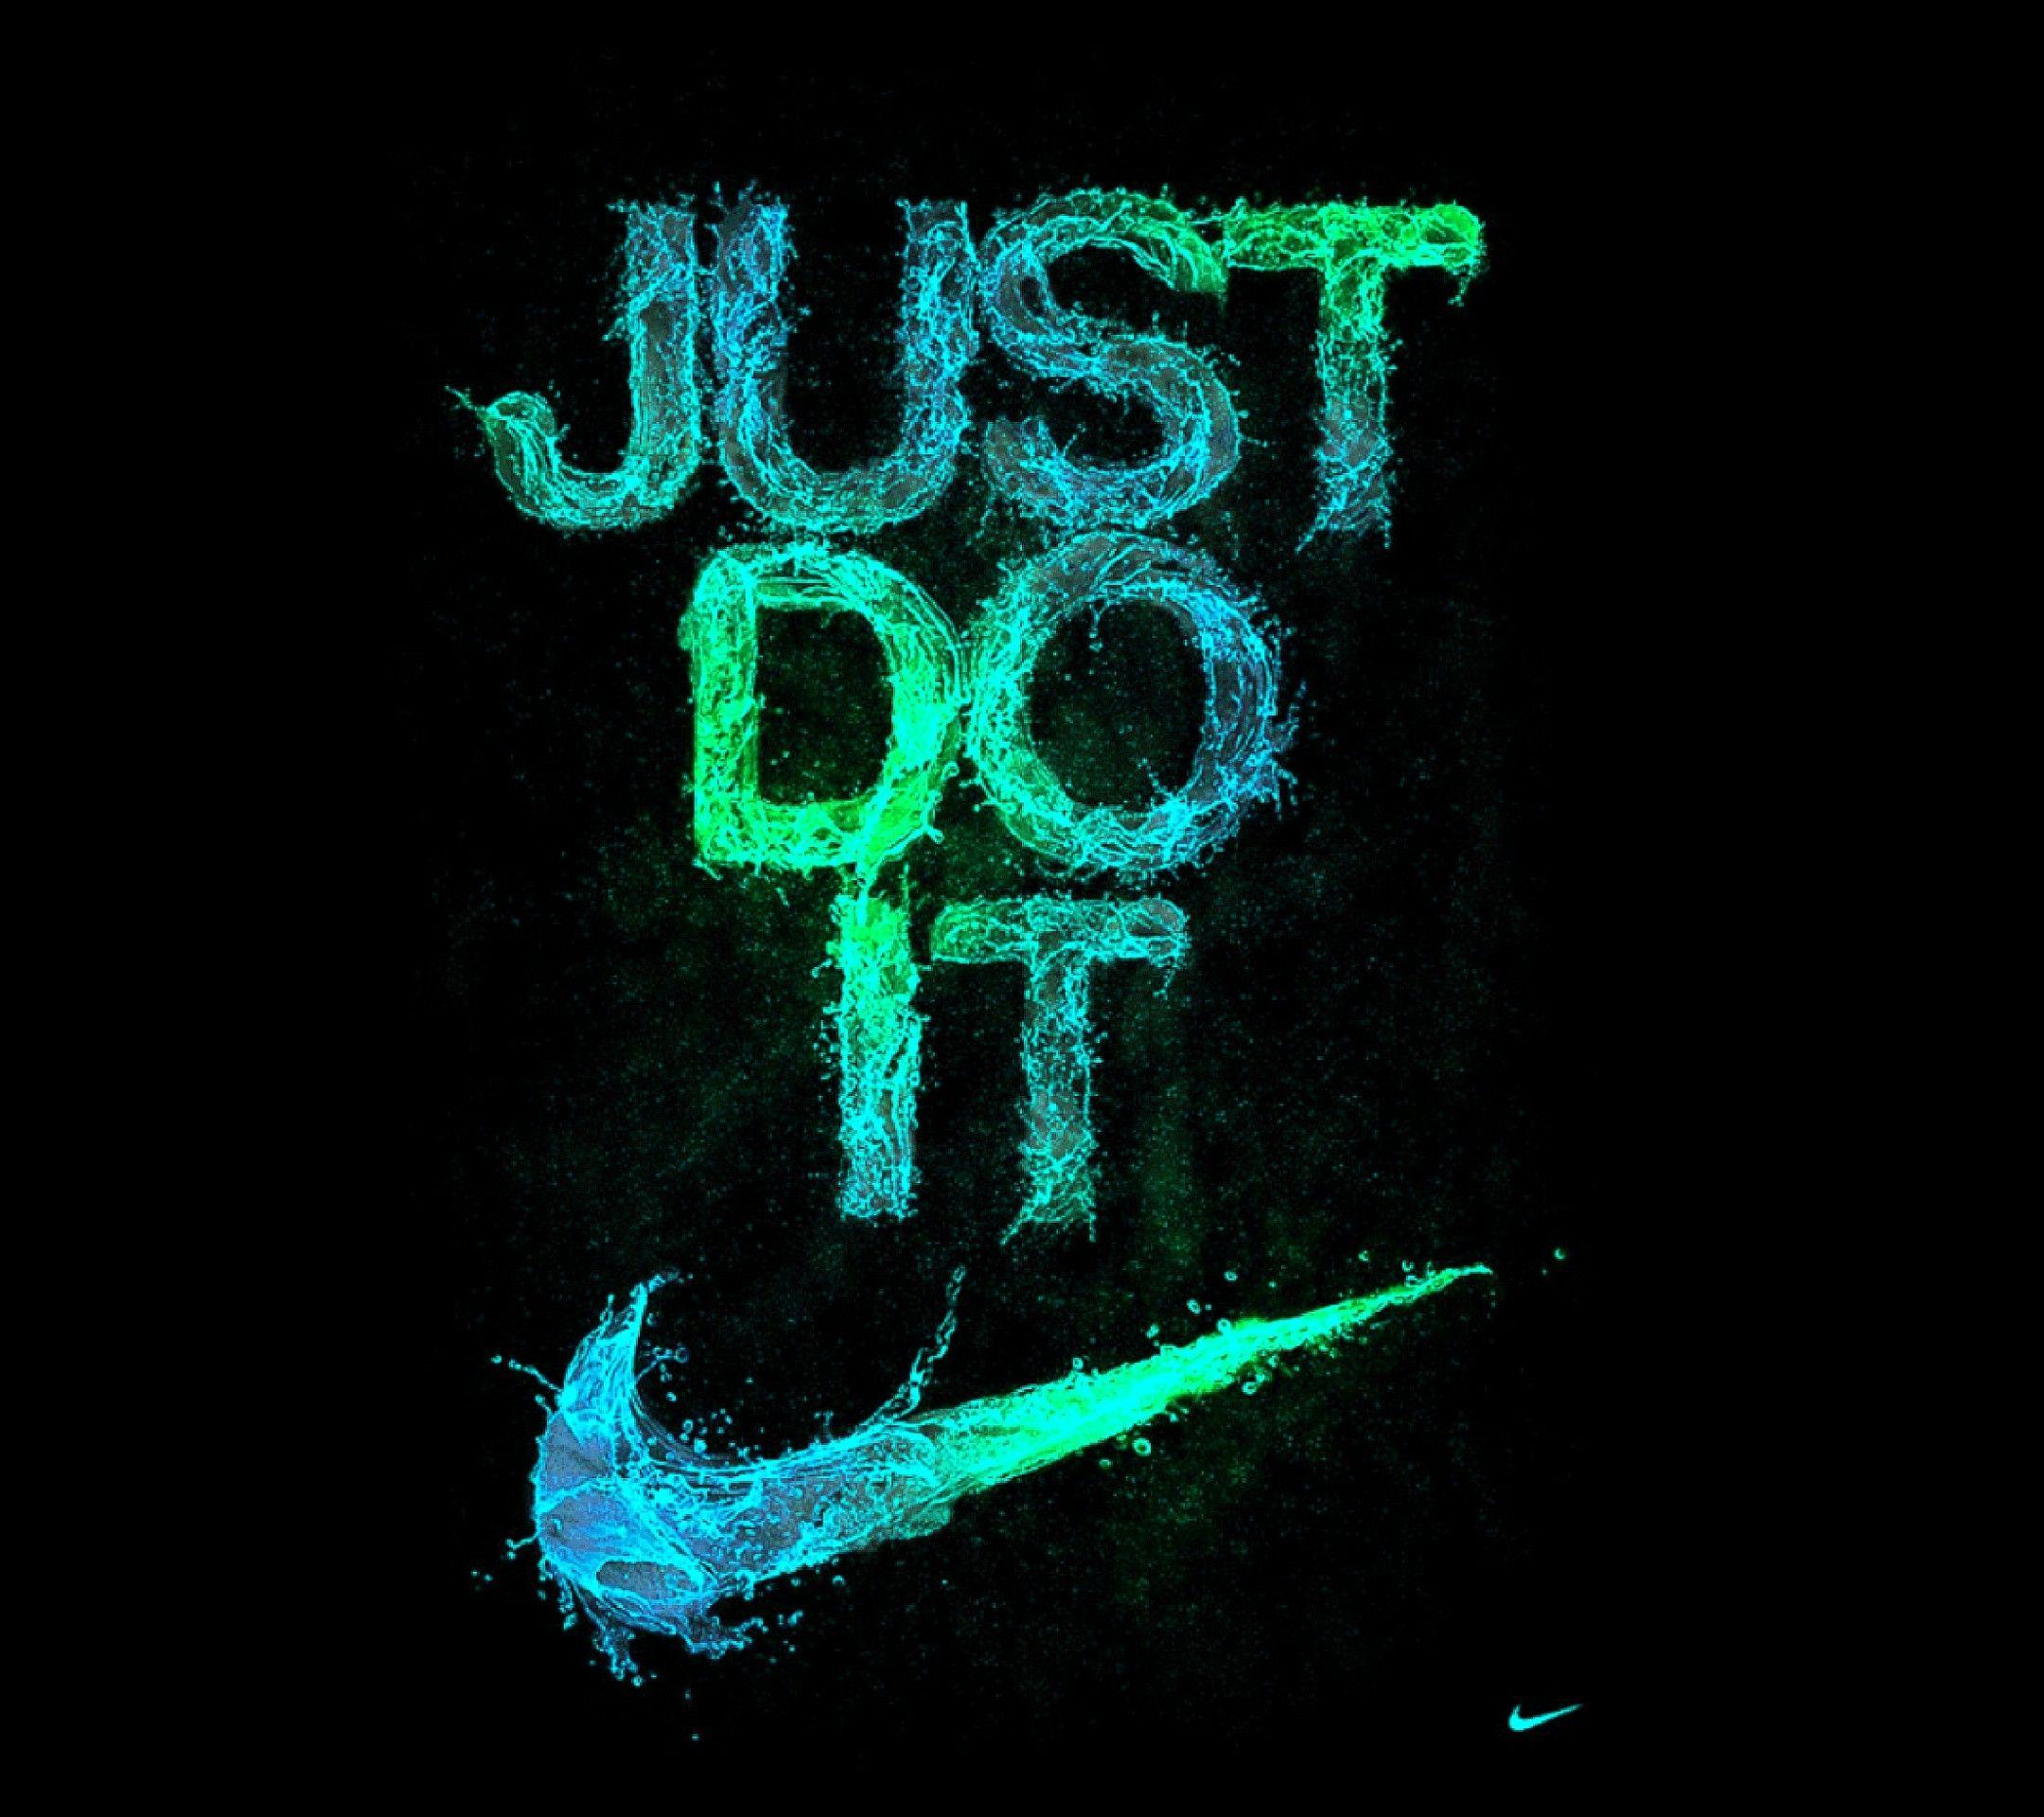 2160x1920 Fond Ecran Nike Avec Nike Just Do It 1 Hình nền cho iPhone X 8 7 6